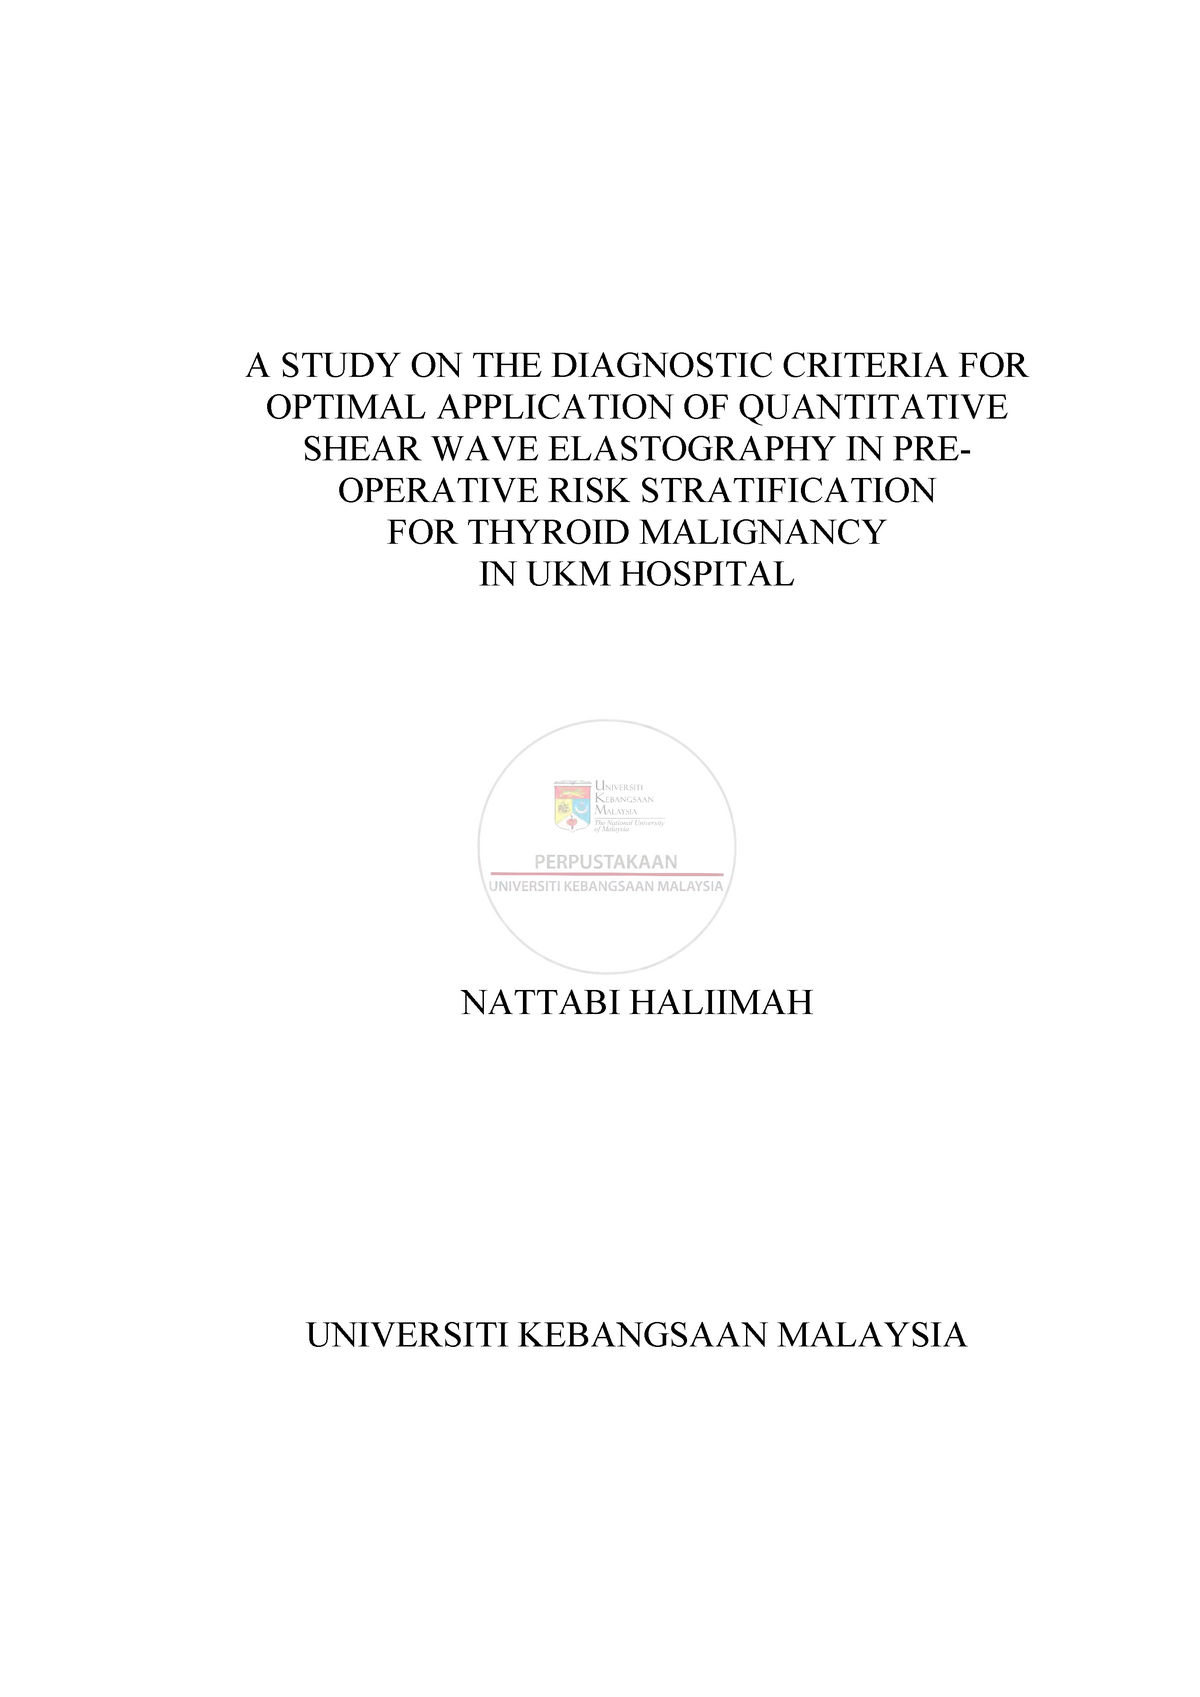 print thesis ukm